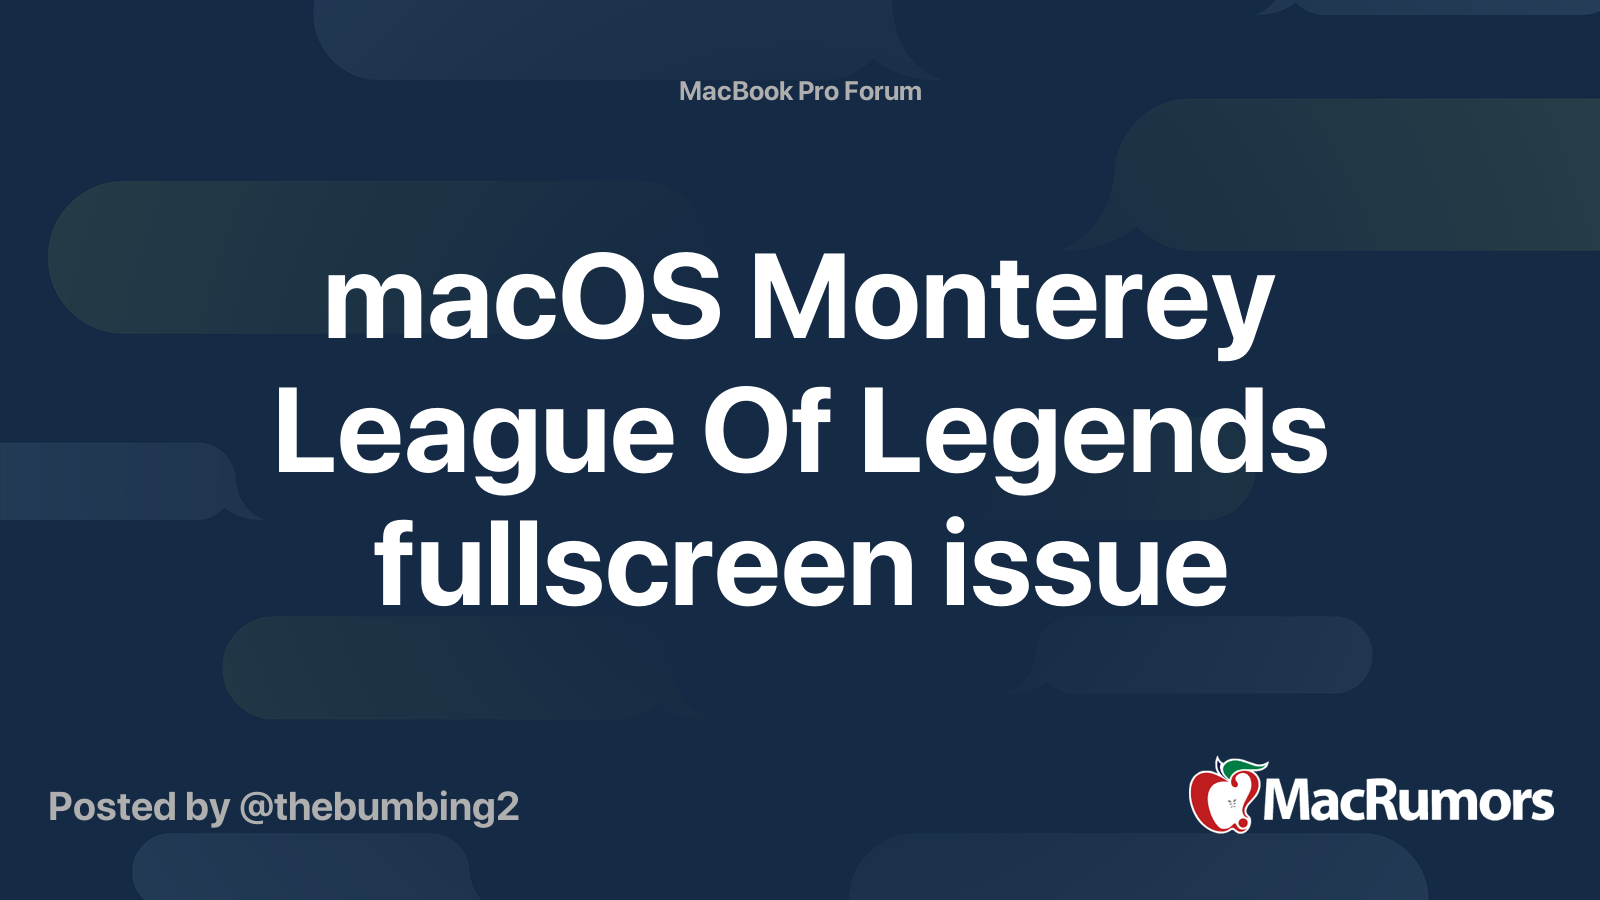 League of Legends on macOS Ventura